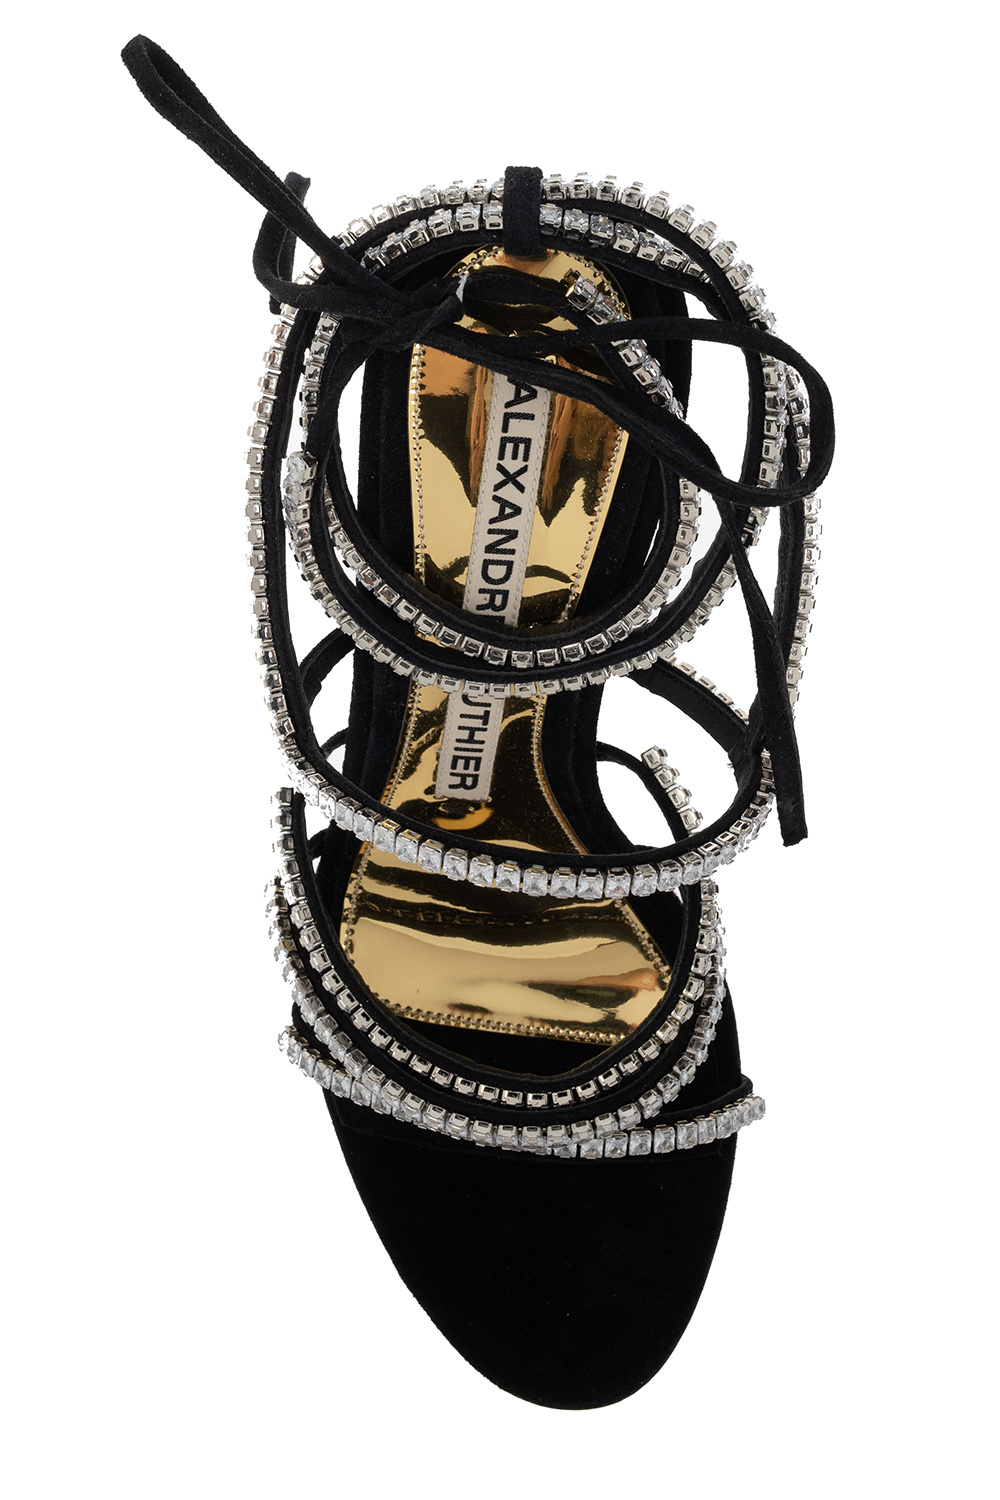 Alexandre Vauthier ‘Basic’ heeled sandals